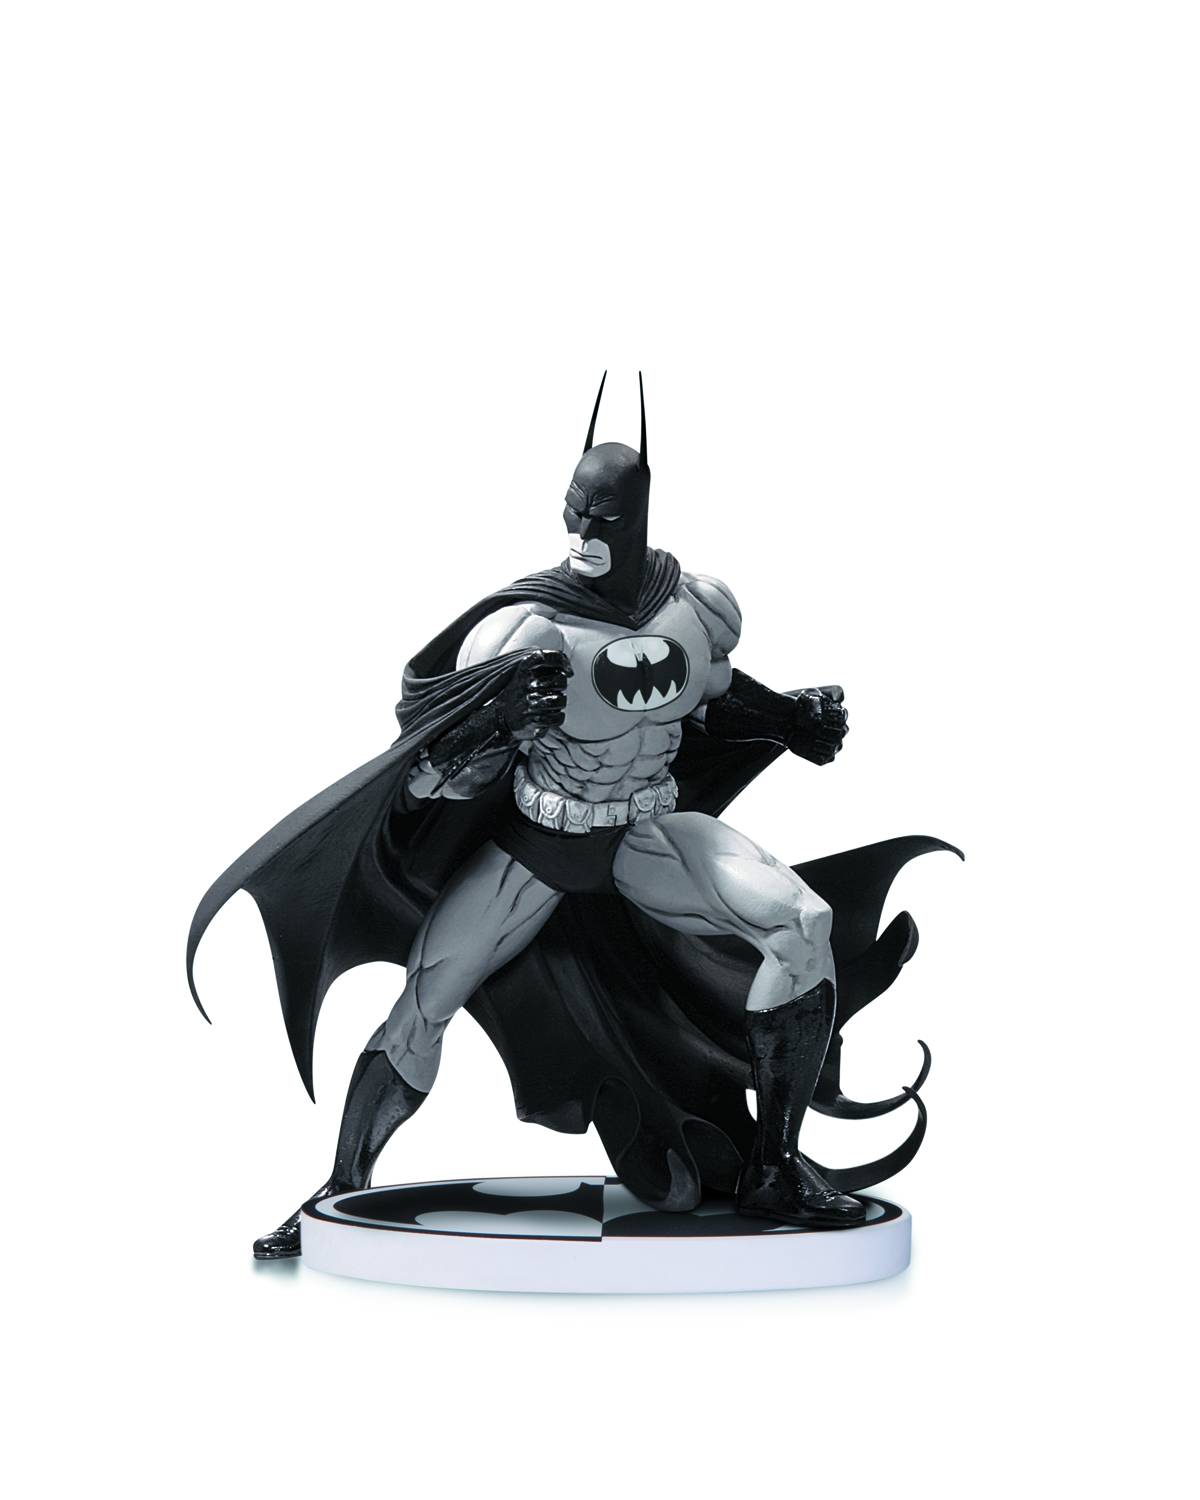 Batman black. DC Batman Black White Toy collection. Batman Black and White Statue. Бэтмен черный персонаж. DC Collectibles Batman: Black & White collection.